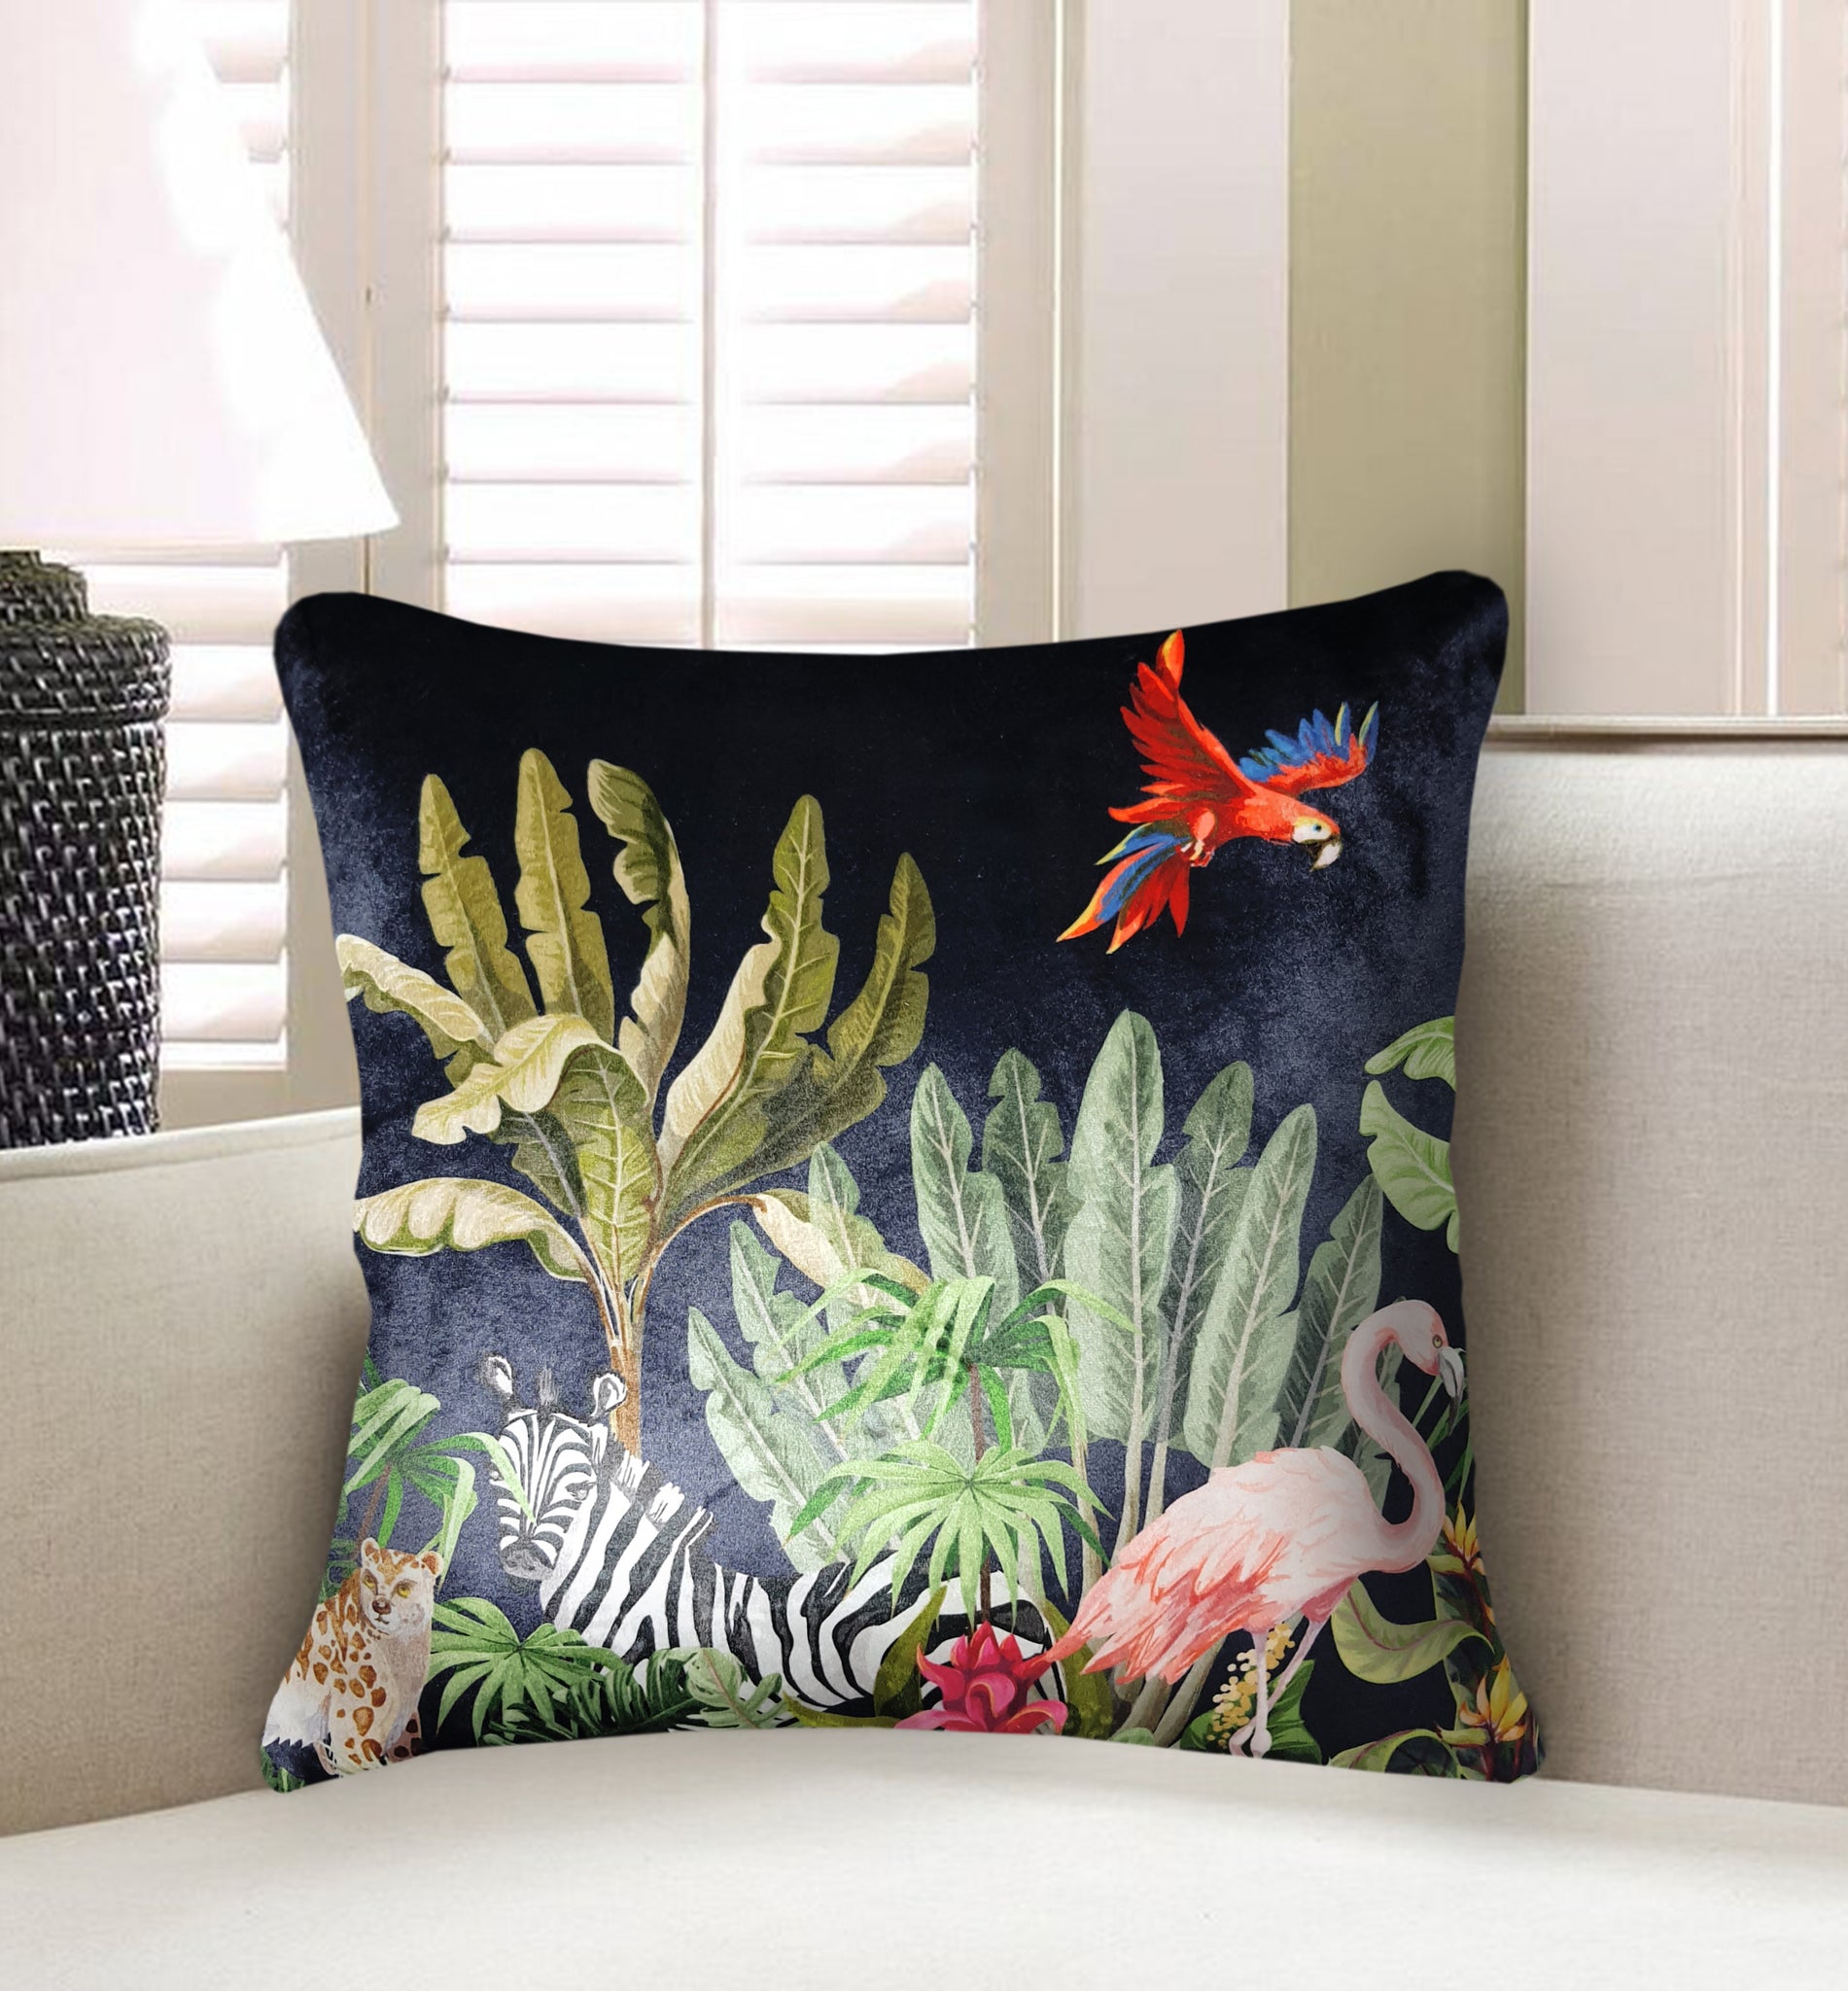  Velvet Cushion Cover Animals in Jungle Decorative Pillowcase Modern Home Decor Throw Pillow for Sofa Chair 45x45 cm 